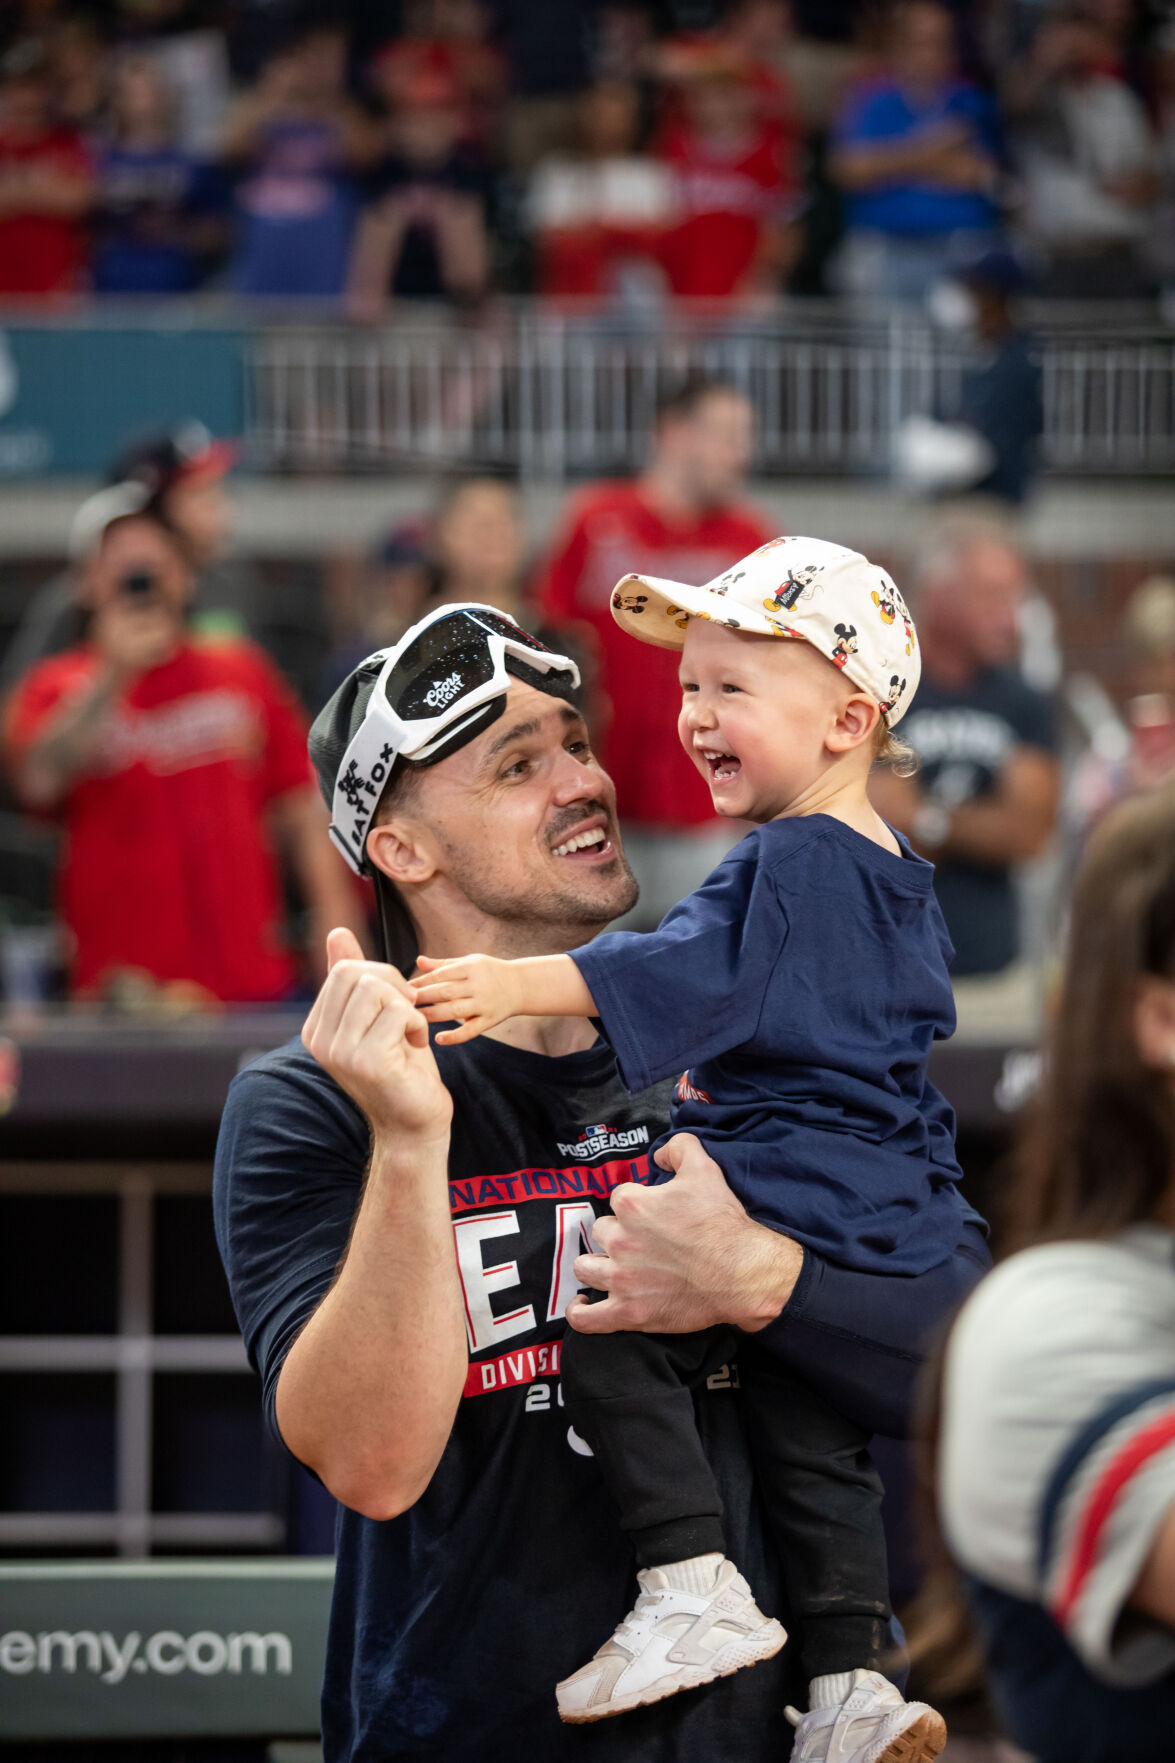 Atlanta Braves on X: “Hey Dad…you wanna have a catch?” #FathersDay